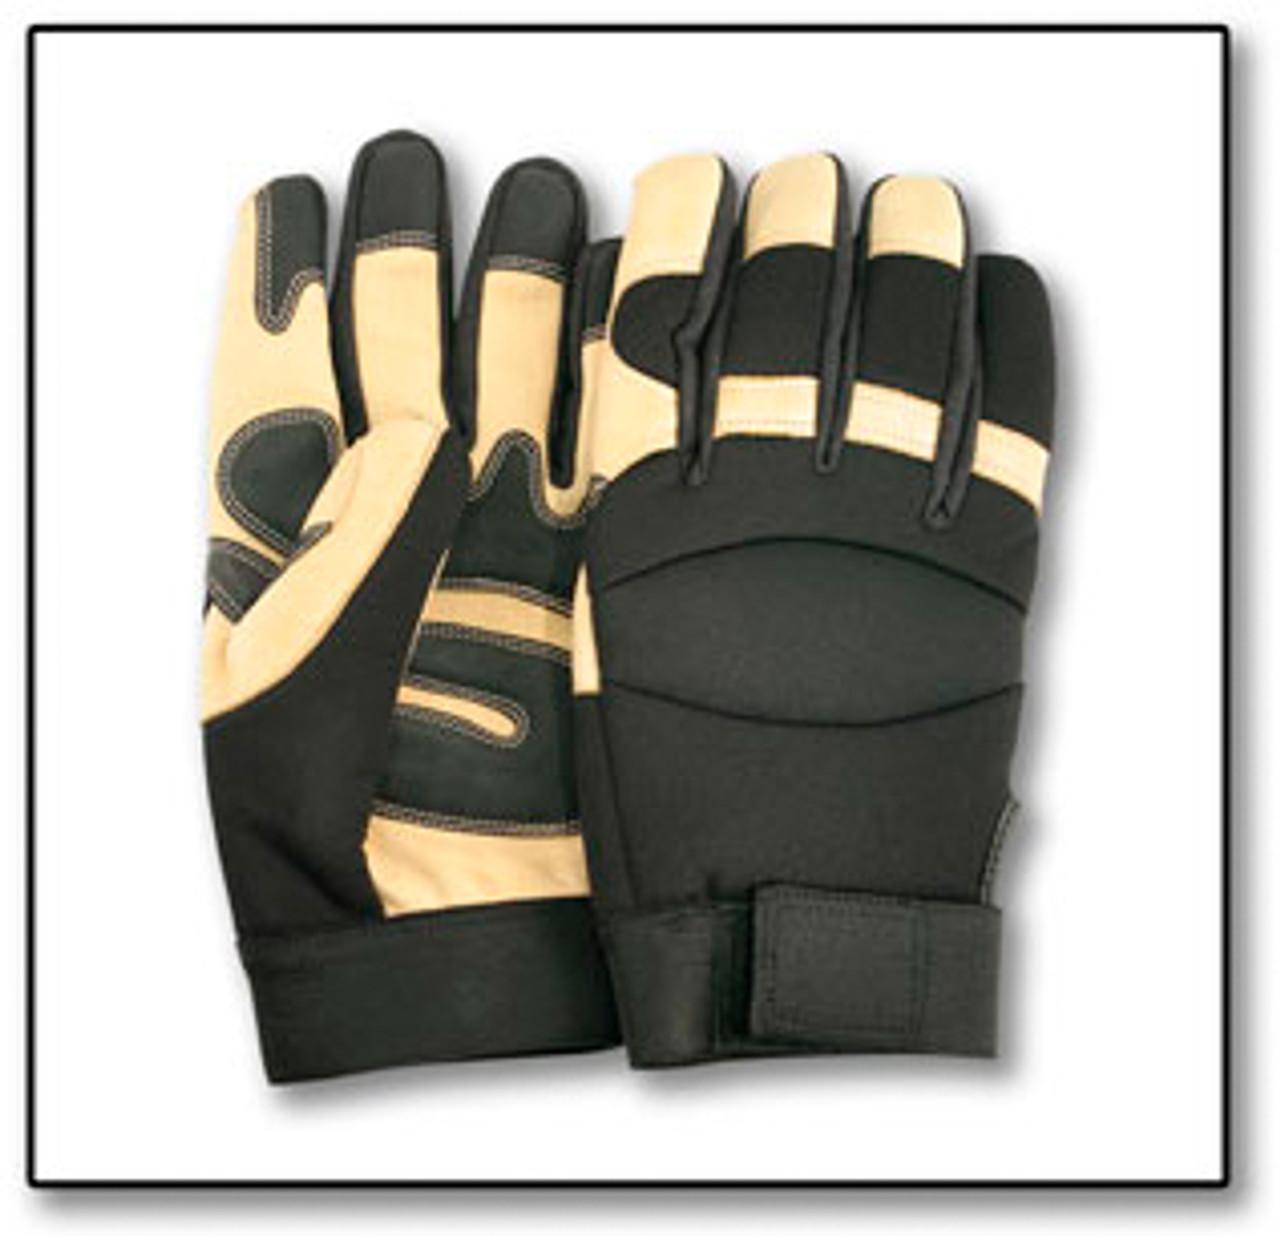 319-323 High Dexterity Insulated Gloves (Pair) - RefrigiWear